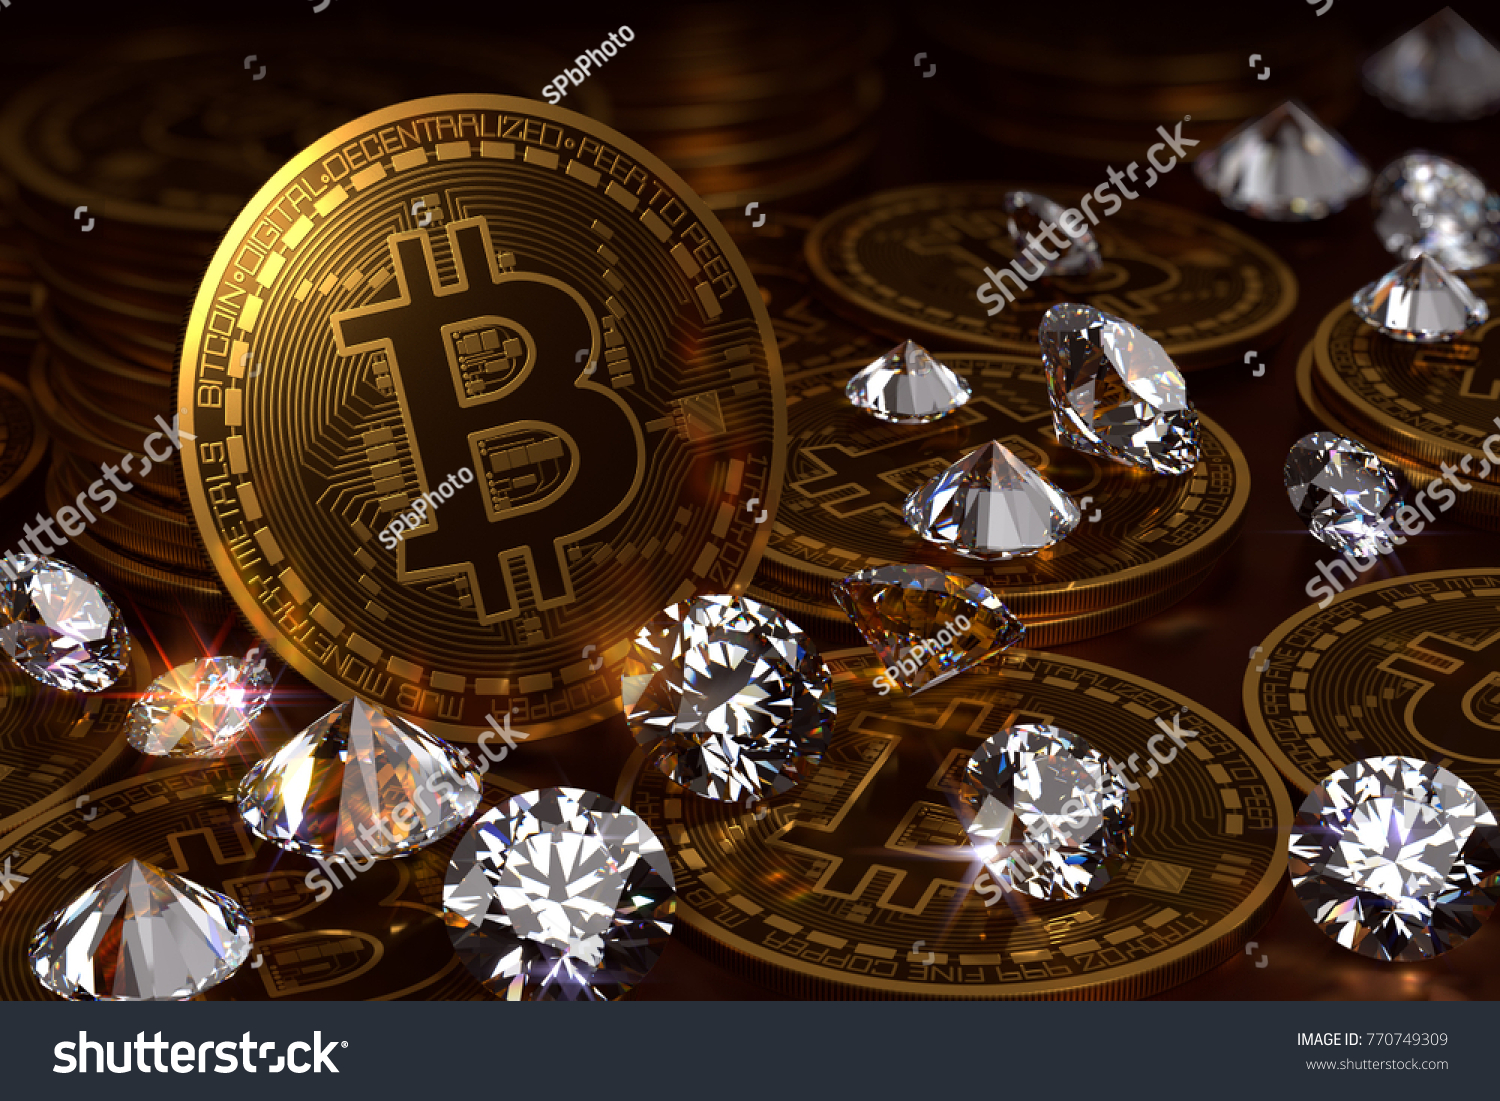 diamond crypto currency